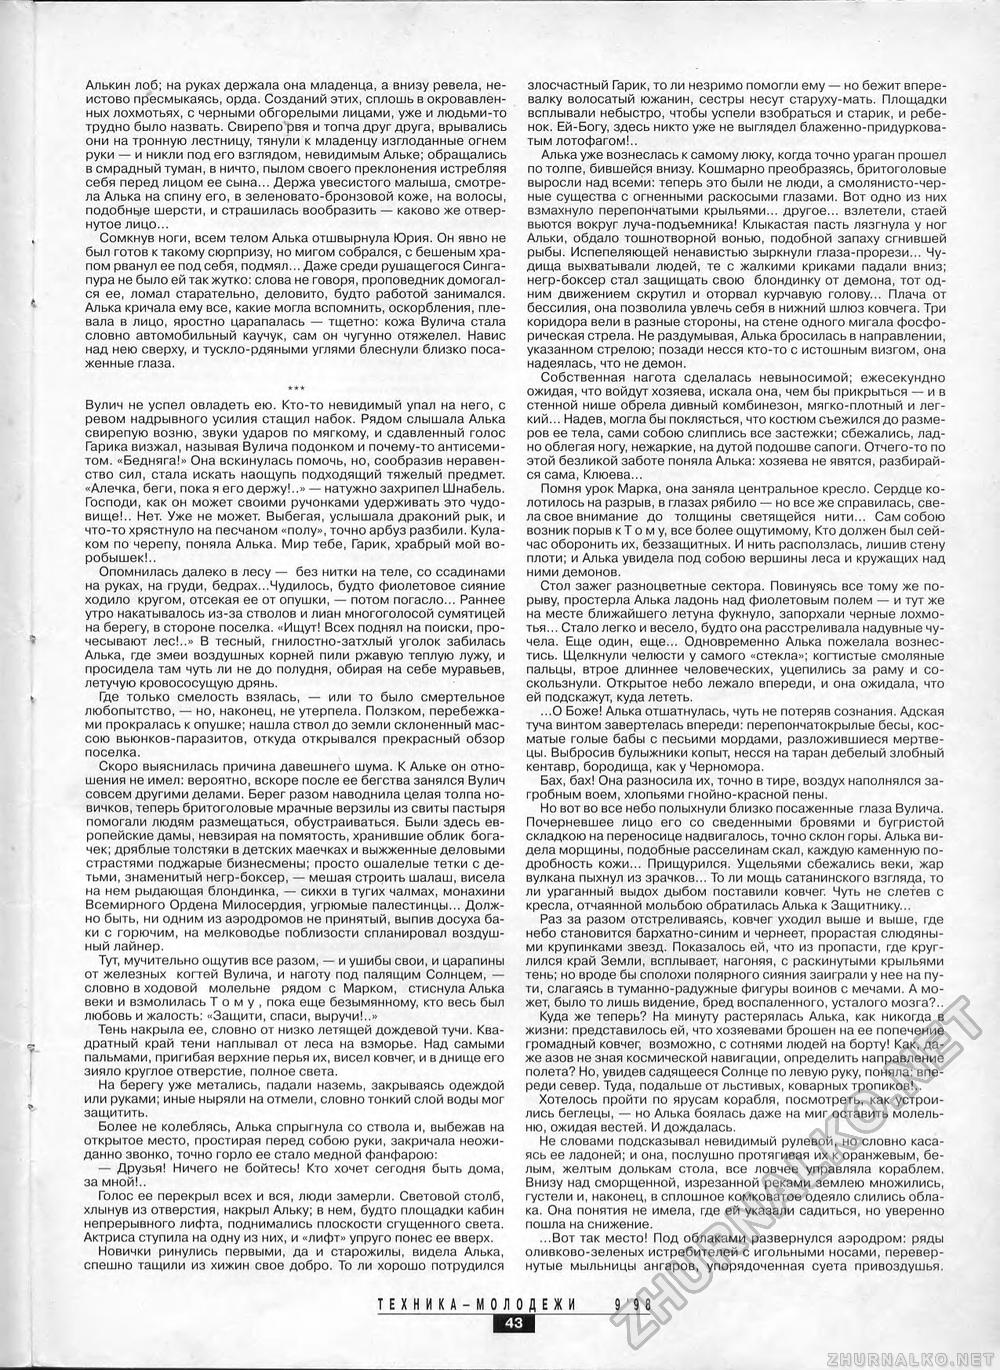 Техника - молодёжи 1998-09, страница 45